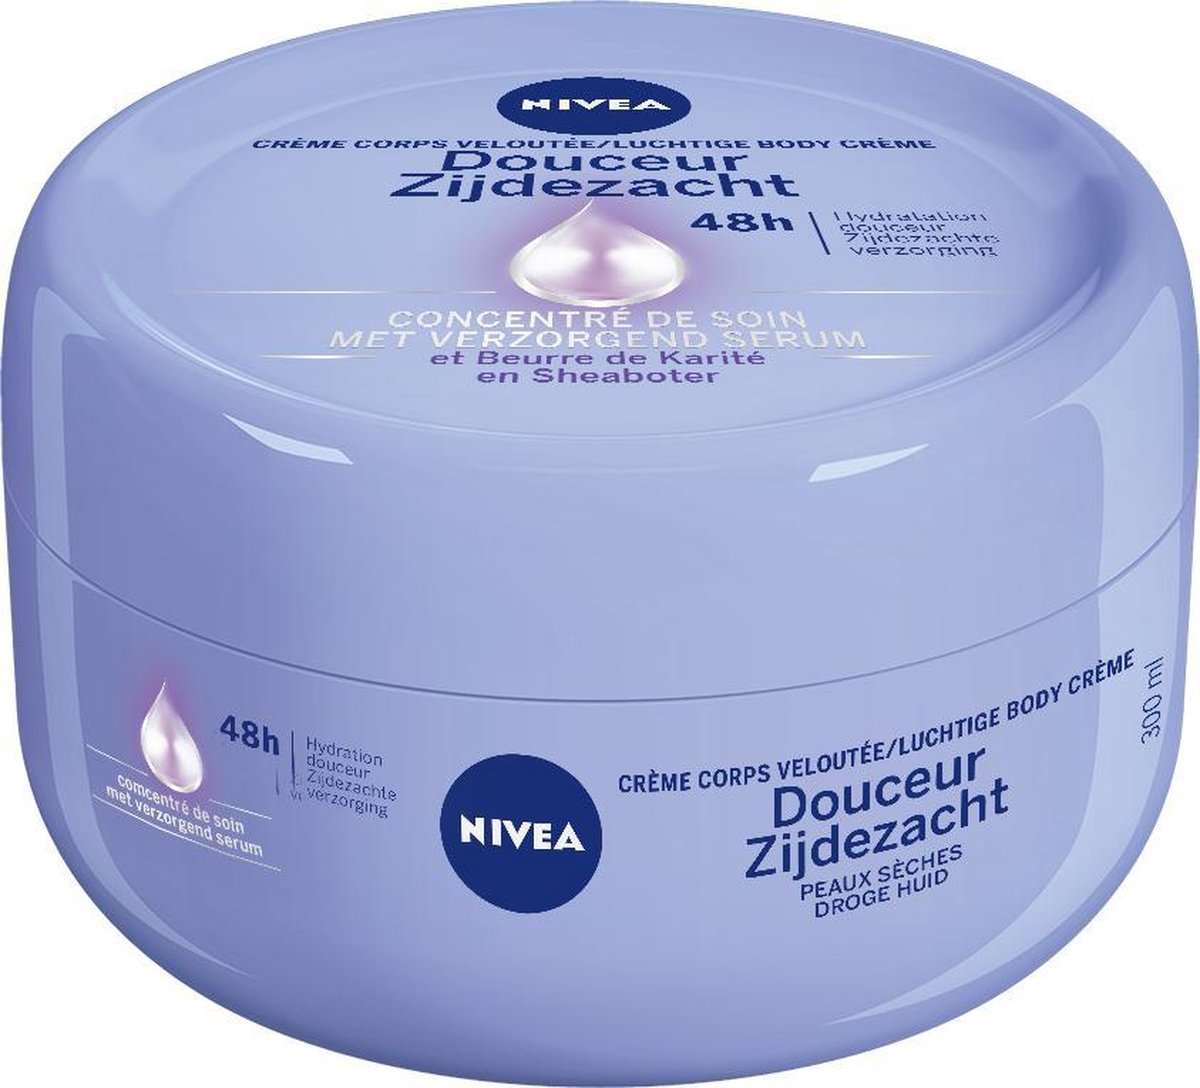 NIVEA Zijdezacht - 300 ml - Body Crème | bol.com